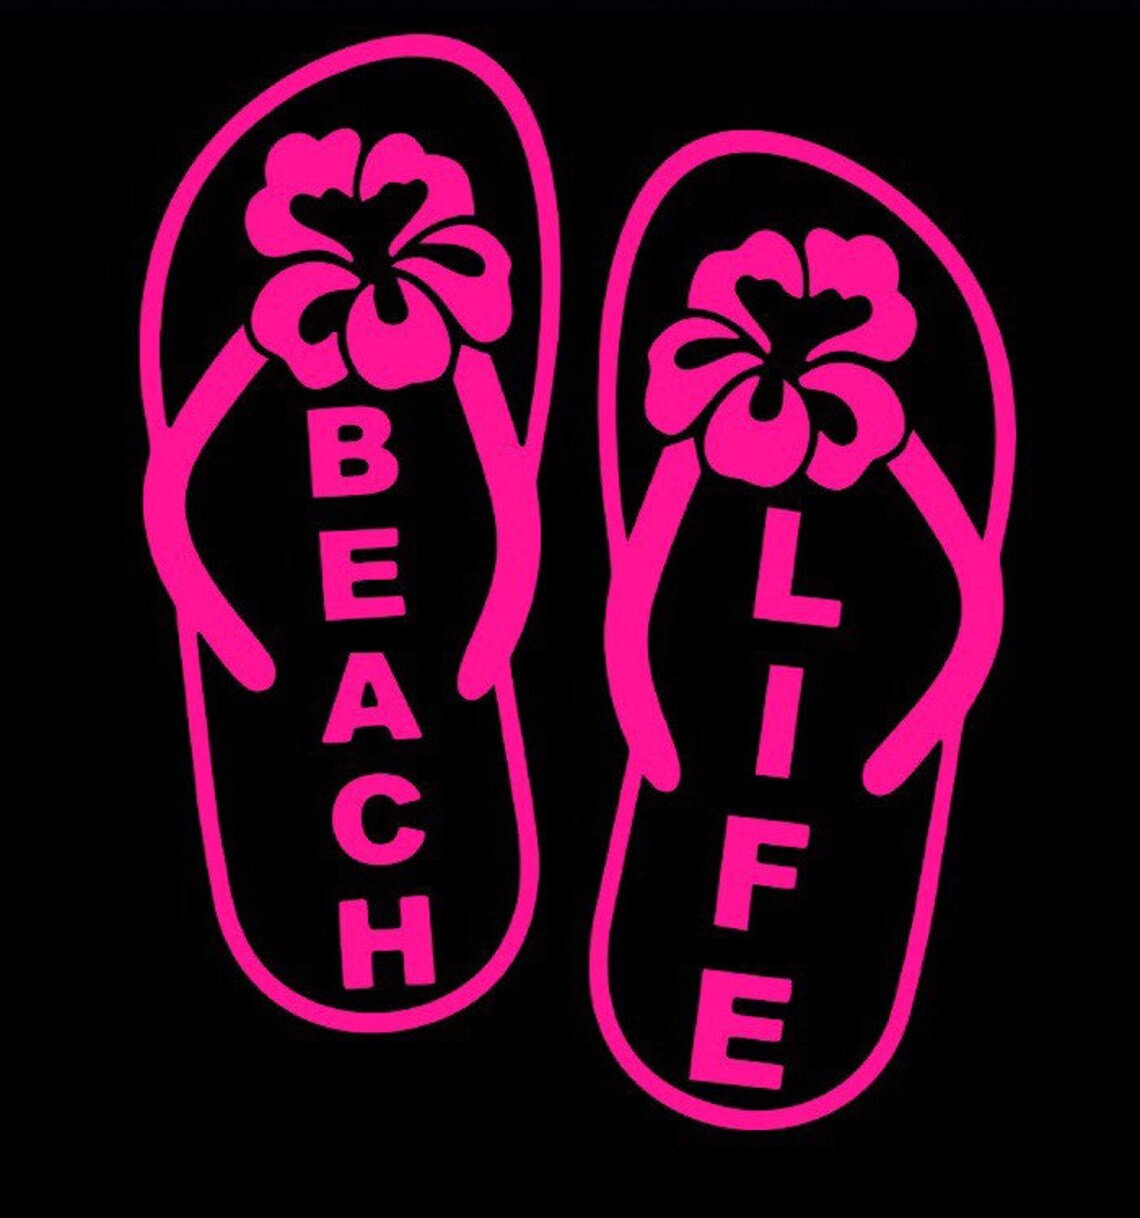 Beach life with flip flops vinyl decal / sticker salt water | Etsy